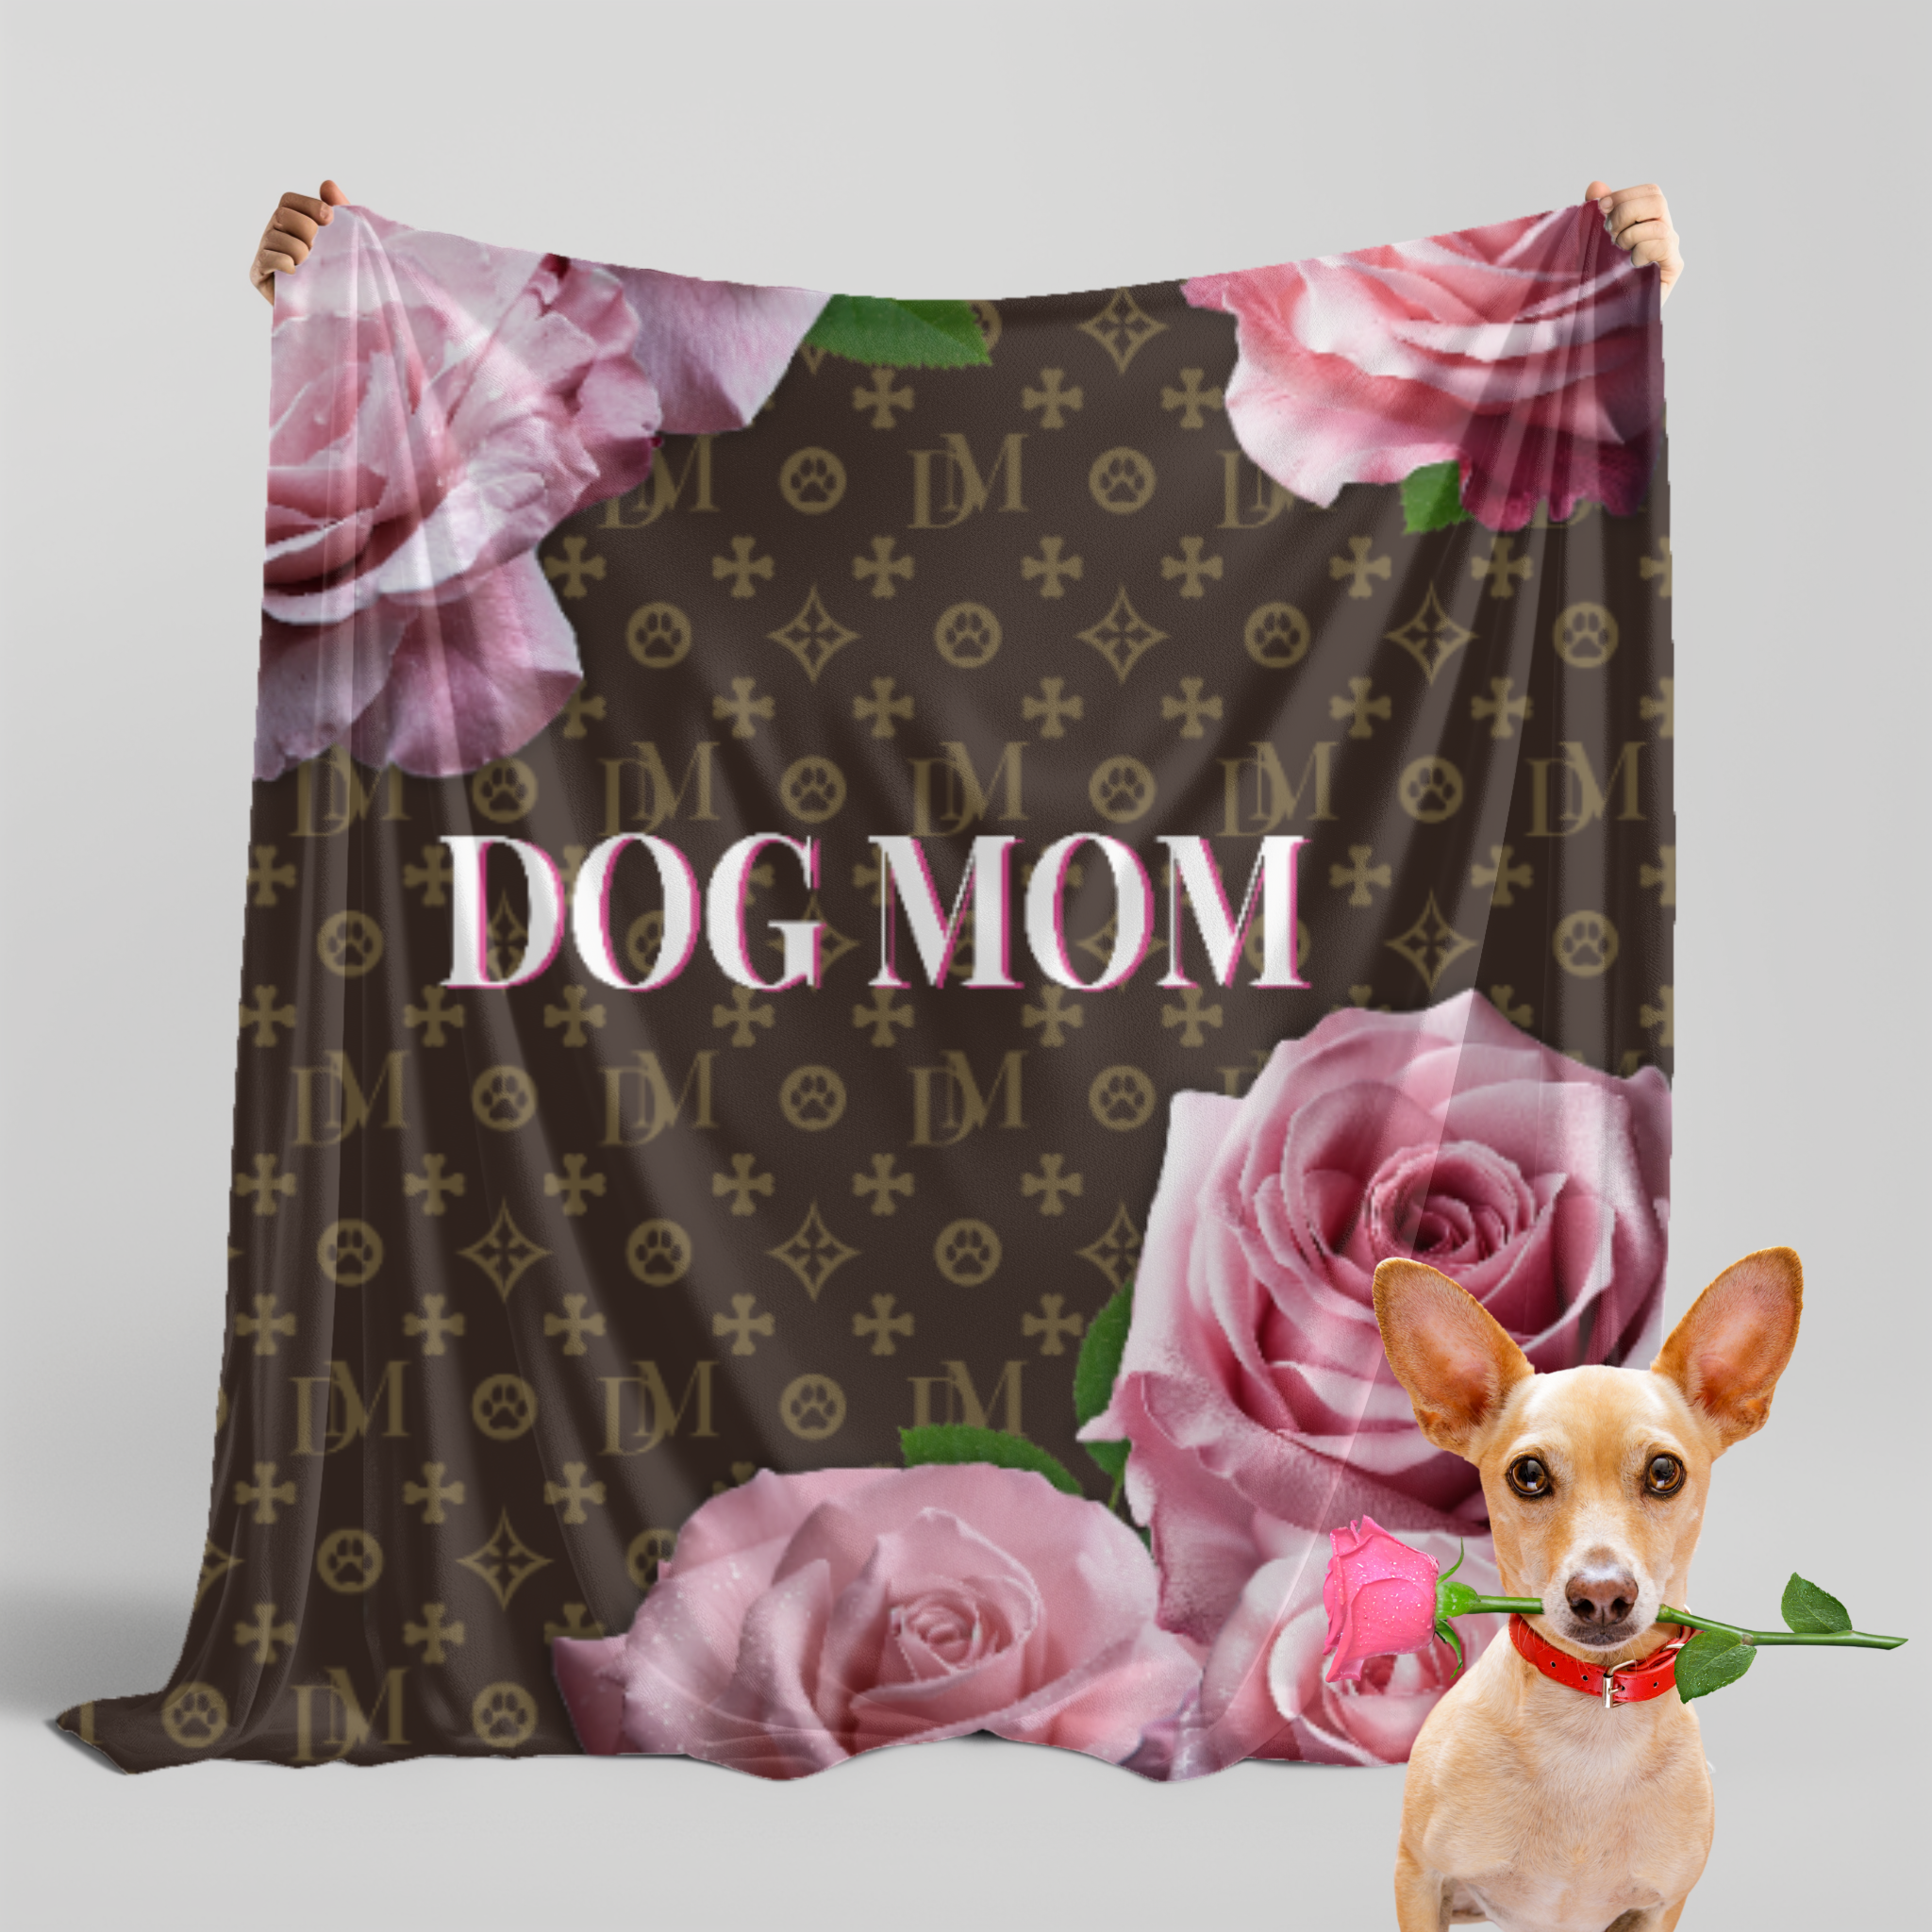 Signature Dog Mom Pink Rose "DM" Motif Premium Sherpa Blanket - dog-mom-dm-pattern-with-pink-roses-sherpa-blanket